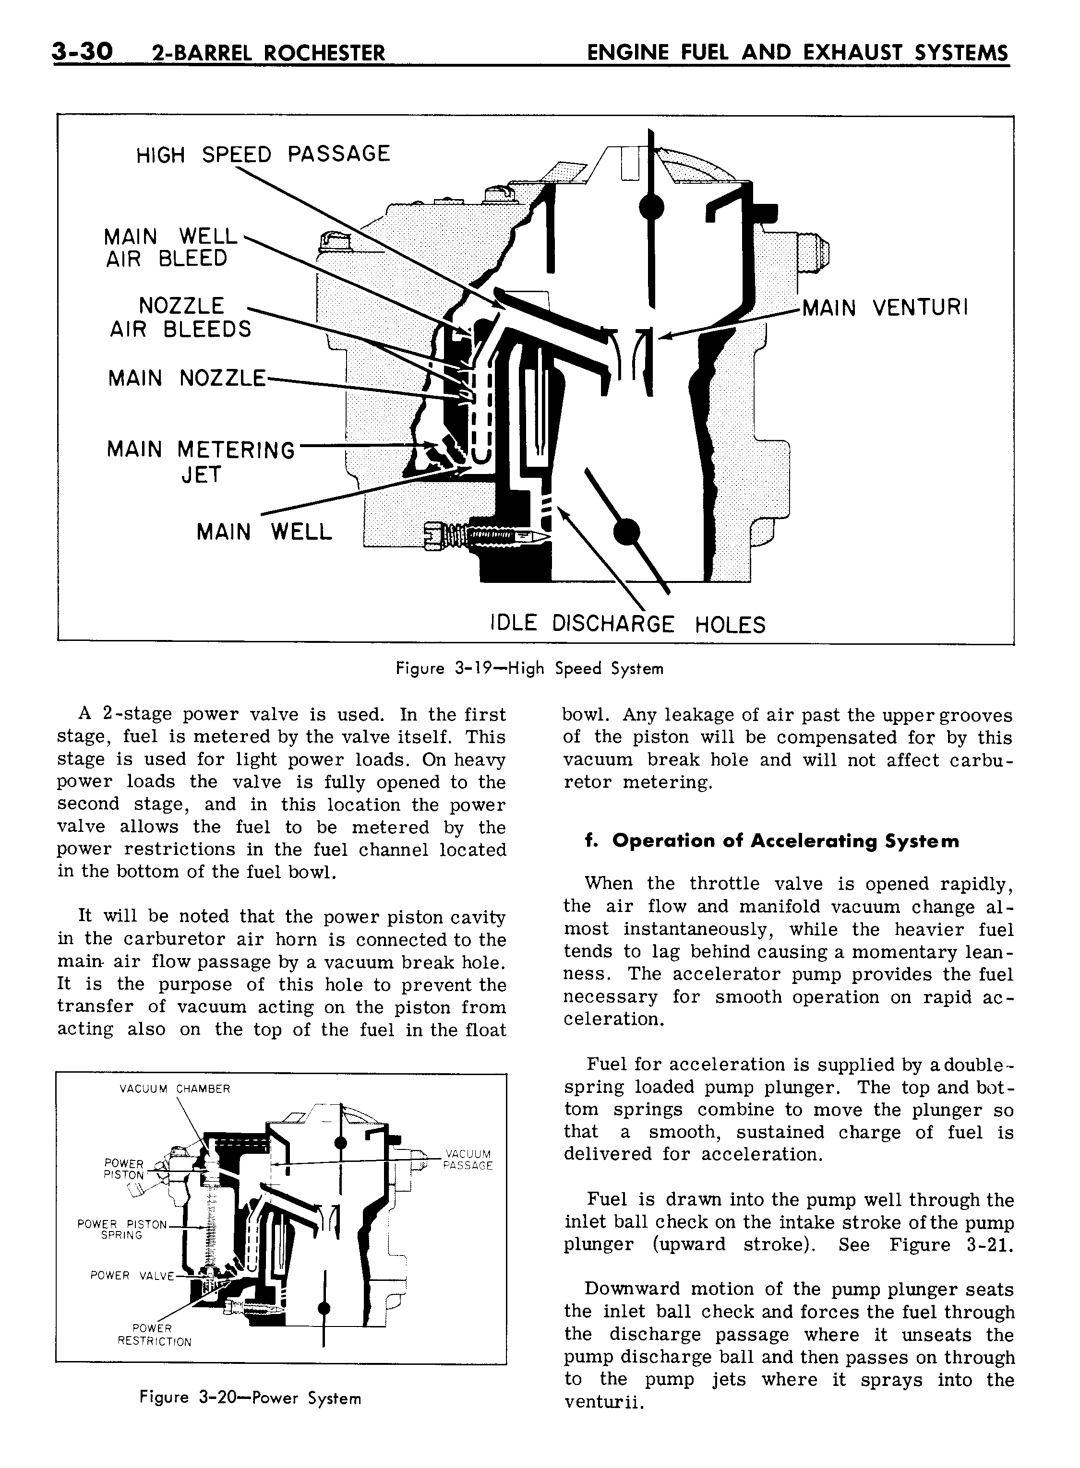 n_04 1961 Buick Shop Manual - Engine Fuel & Exhaust-030-030.jpg